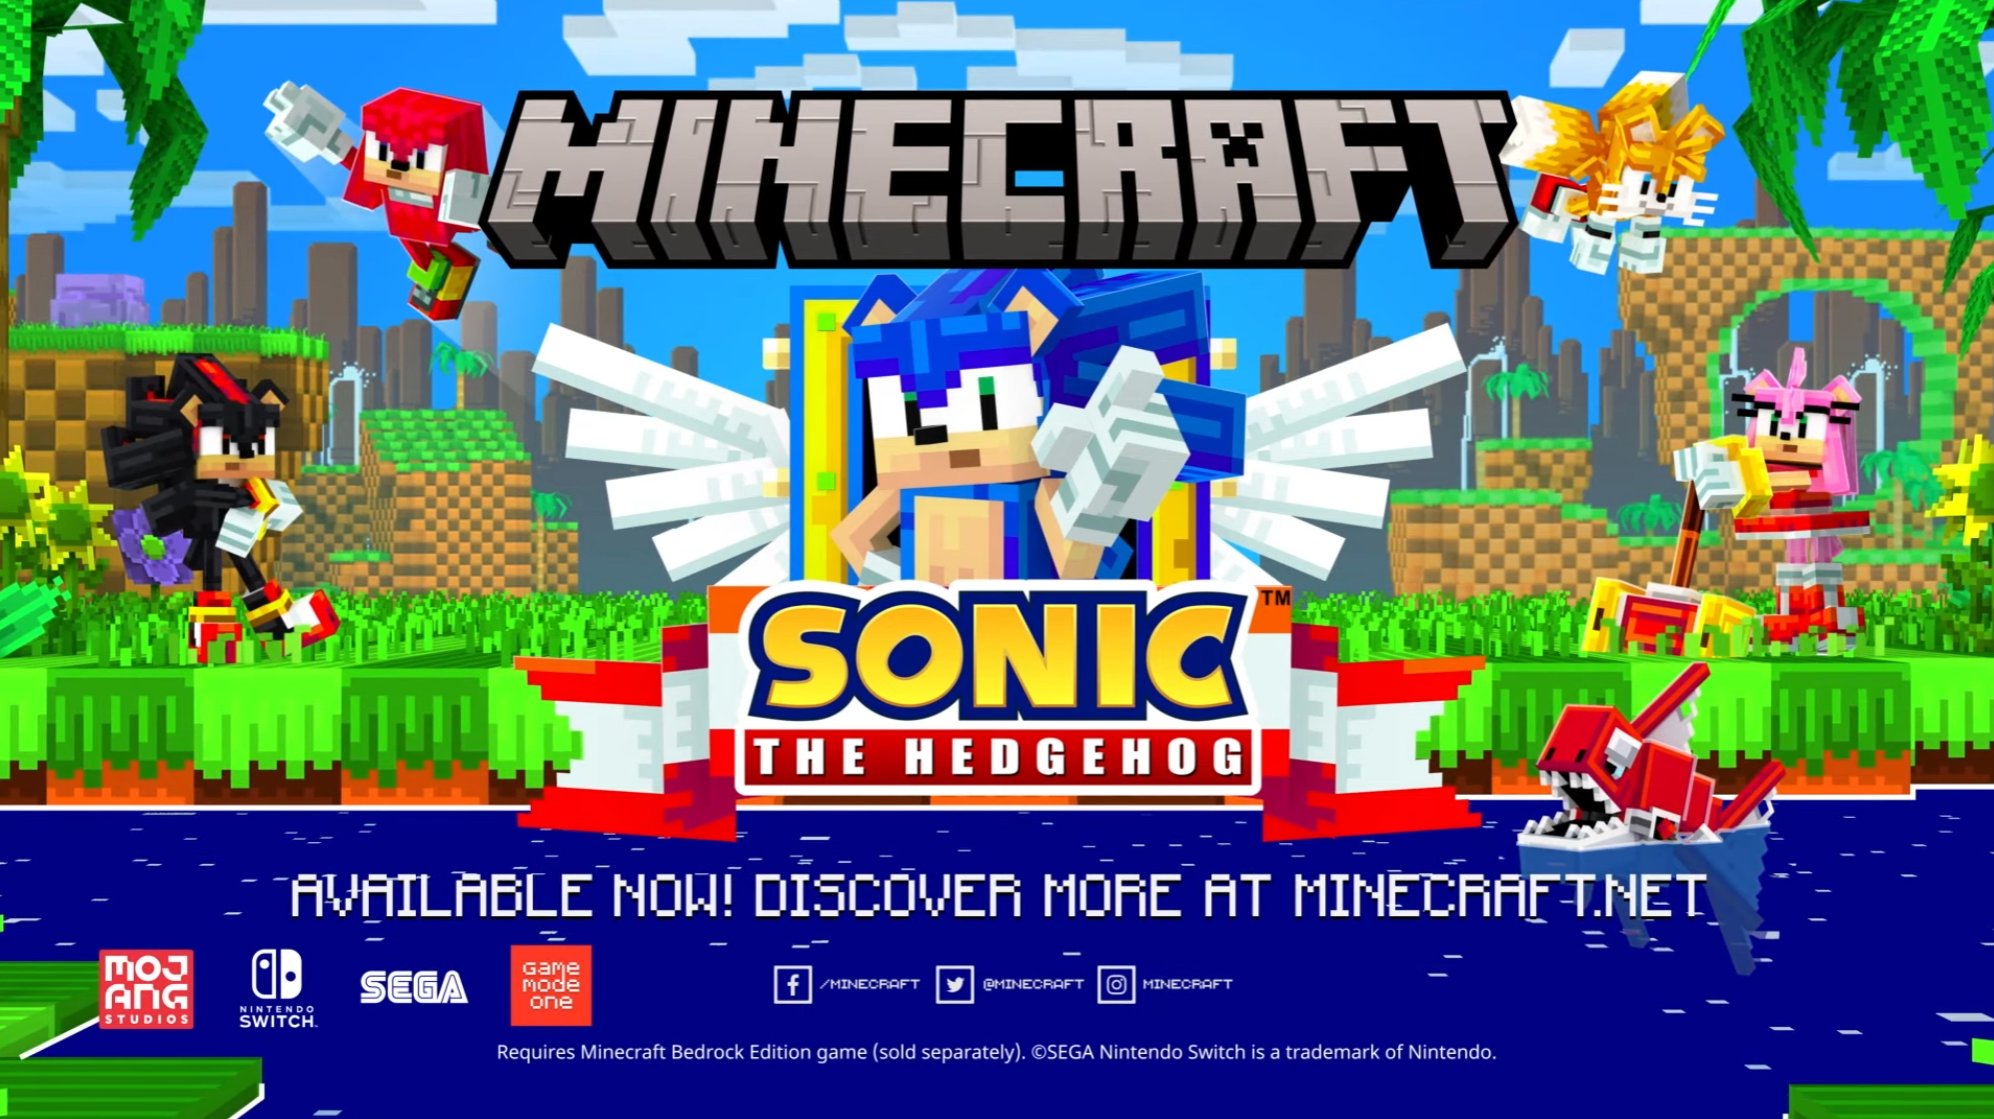 Minecraft Sonic The Hedgehog 06 22 21 1